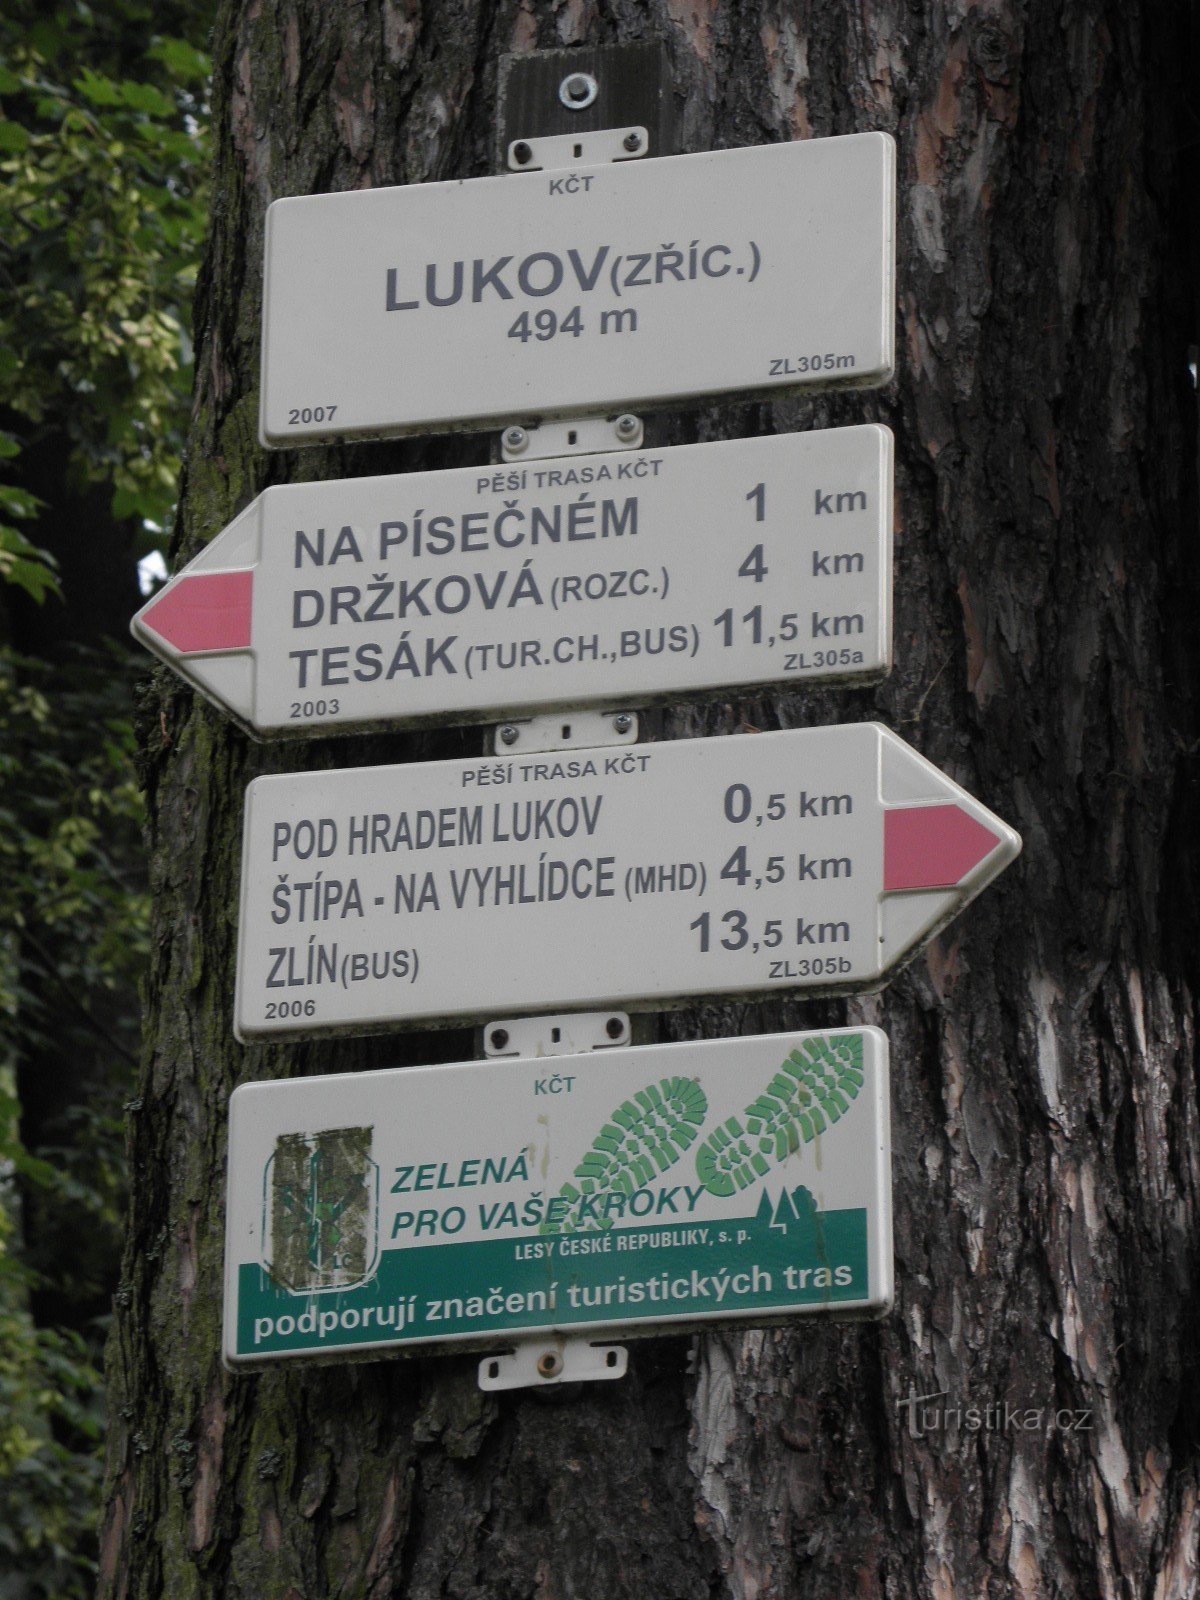 Ngã tư Lukovo - ČTZ